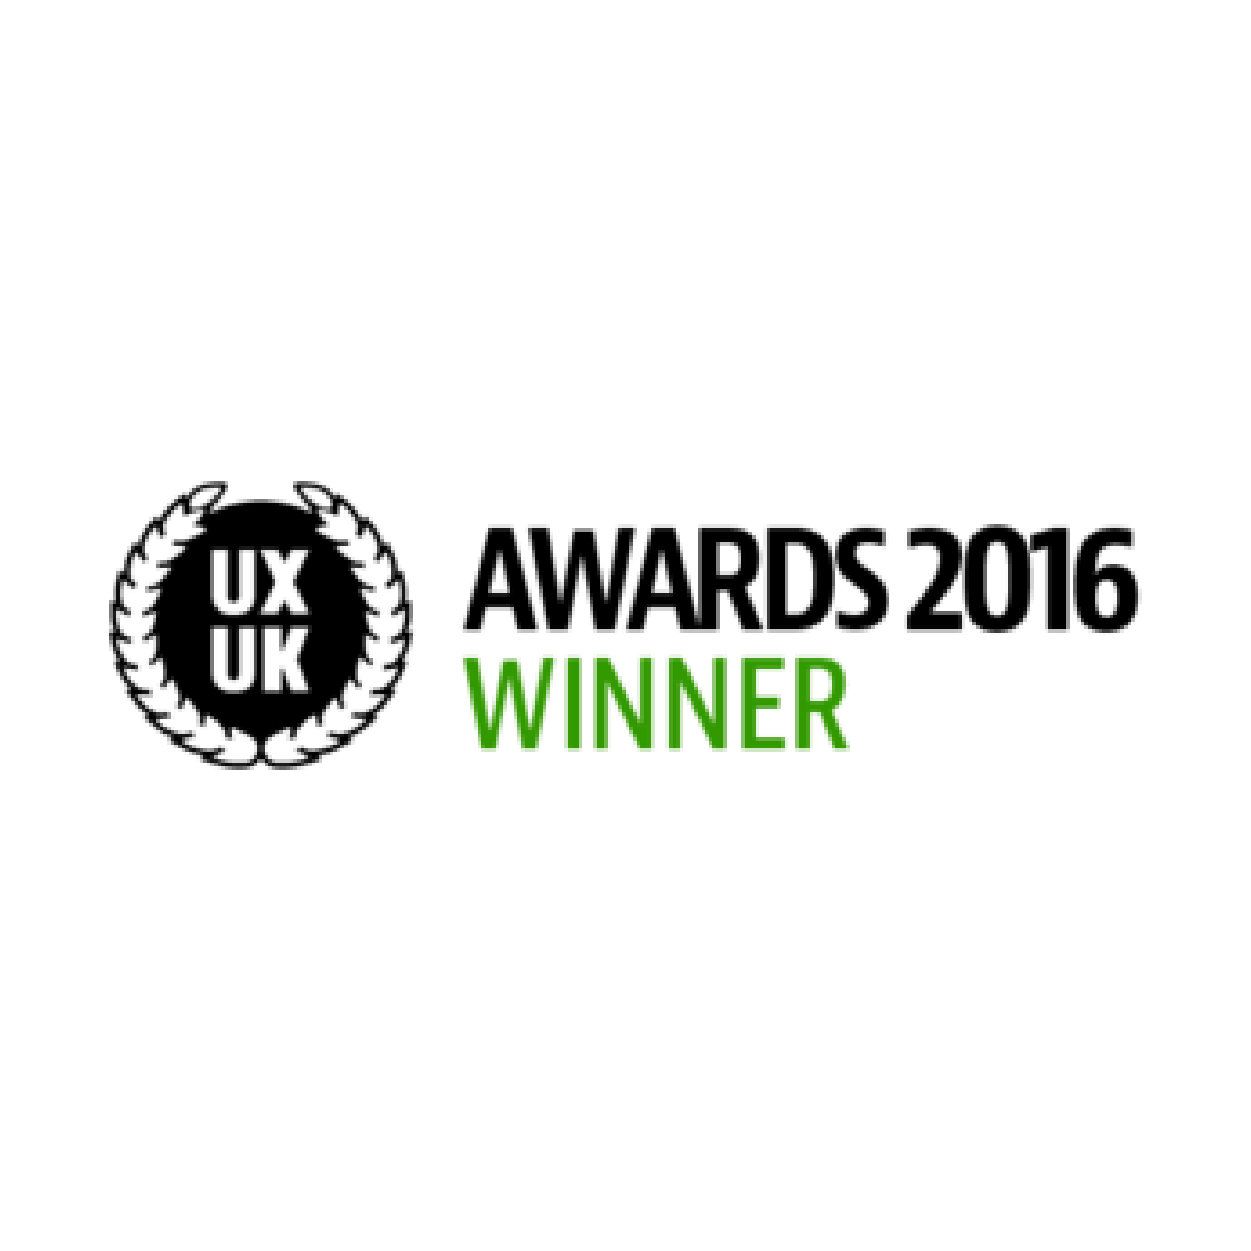 UXUK awards 2016 winner badge